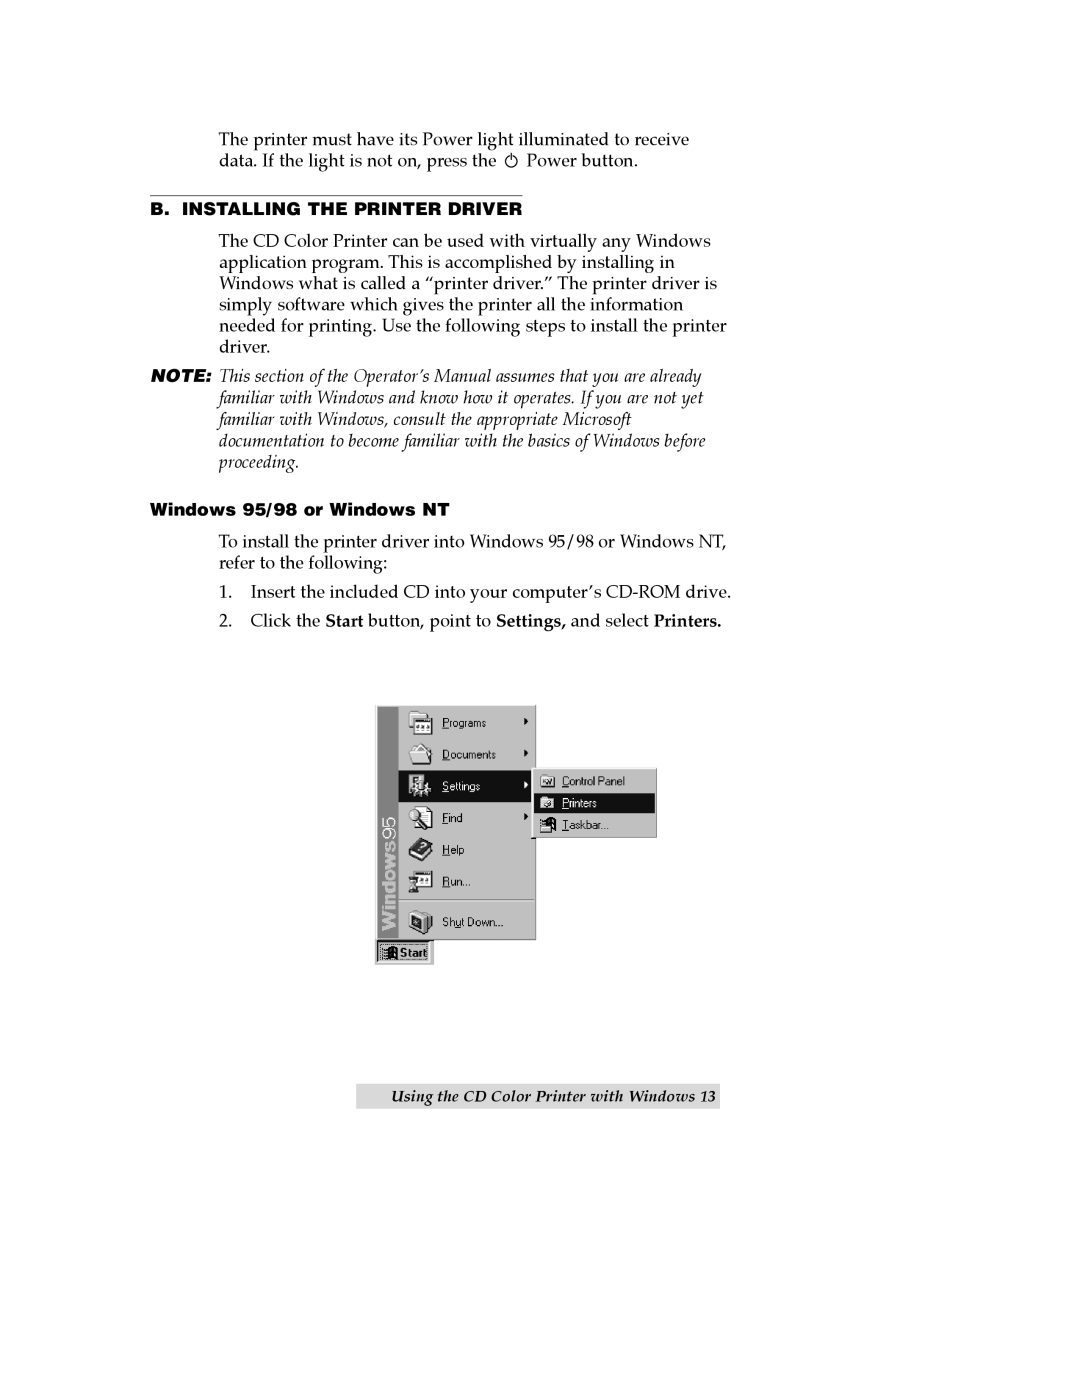 Primera Technology CD Color Printer II manual B. Installing The Printer Driver, Windows 95/98 or Windows NT 